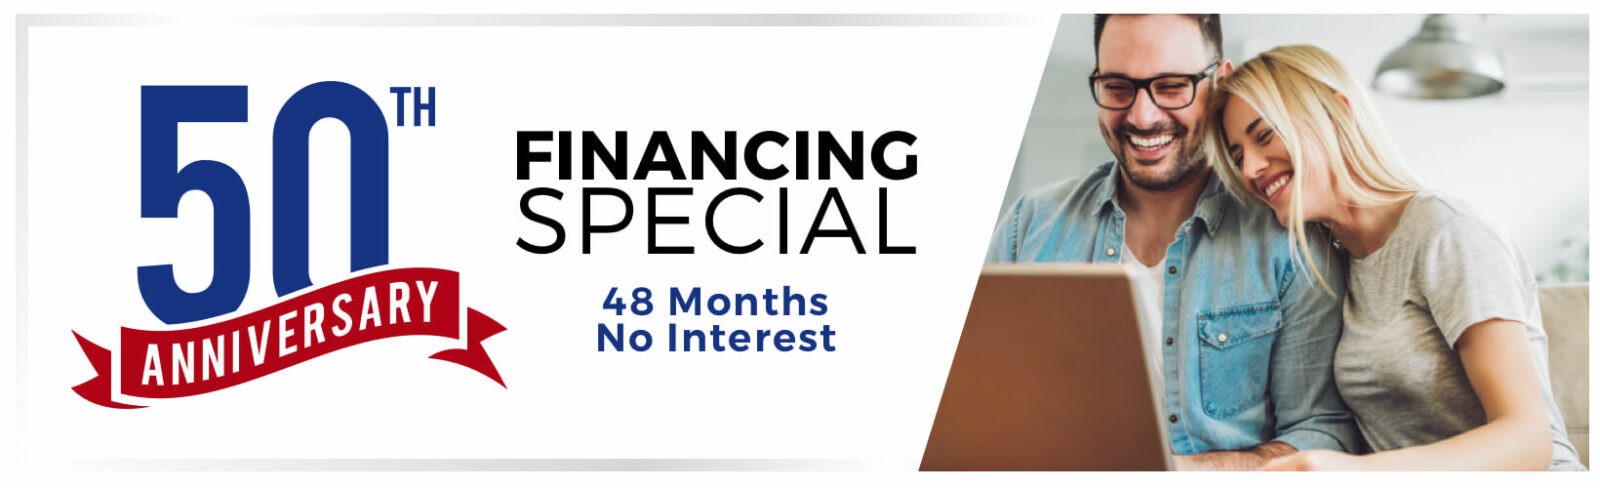 50th-anniversary-special-flooring-financing